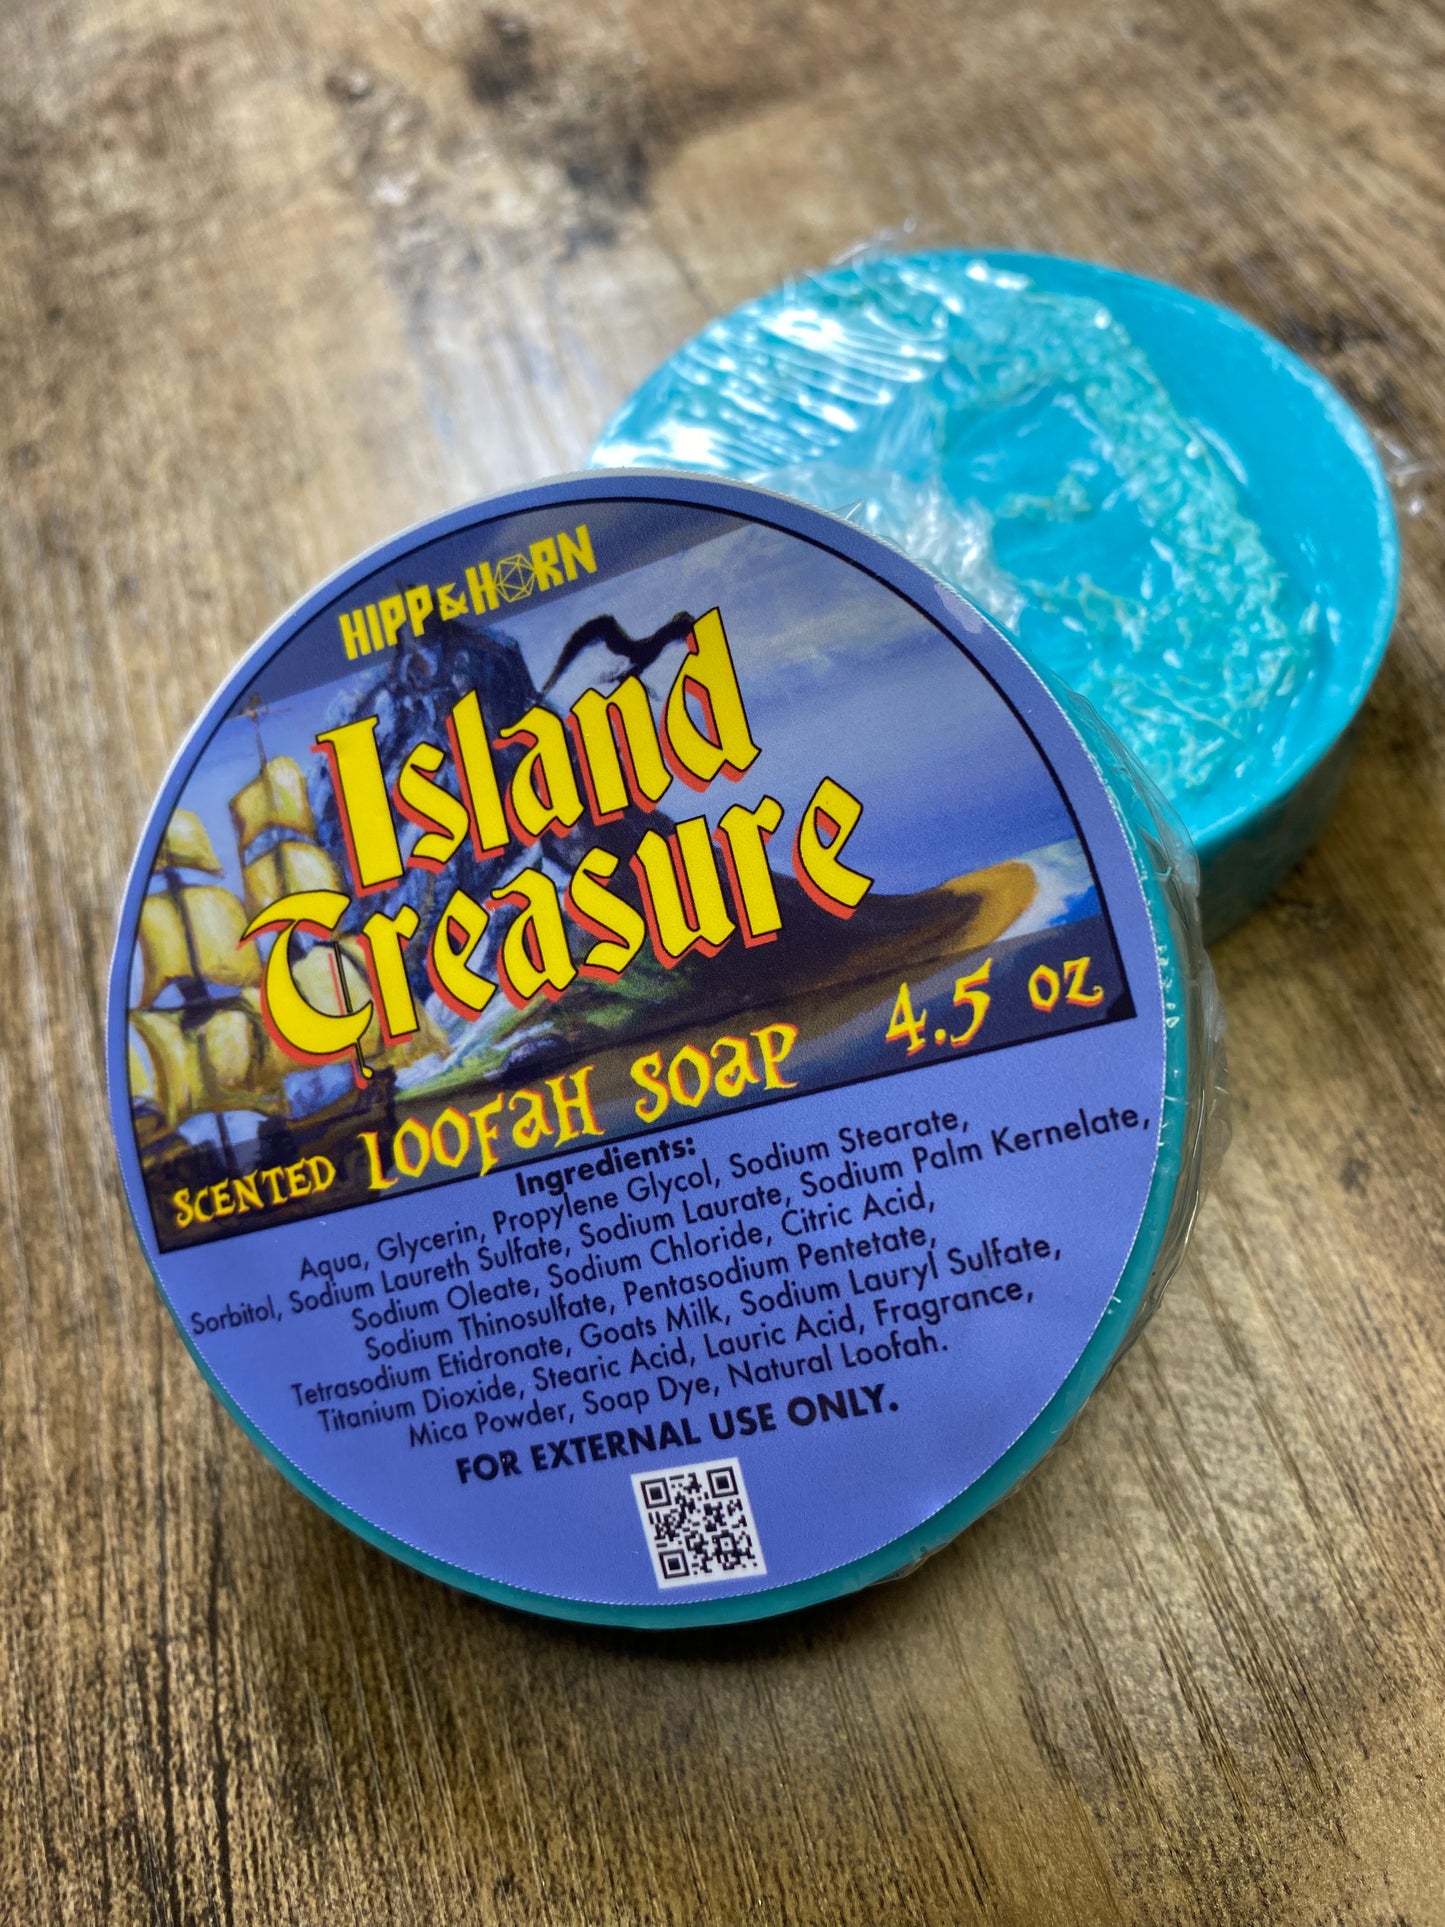 Fantasy Exfoliating Natural Loofah Soap - Choose Your Scent - 4.5 oz